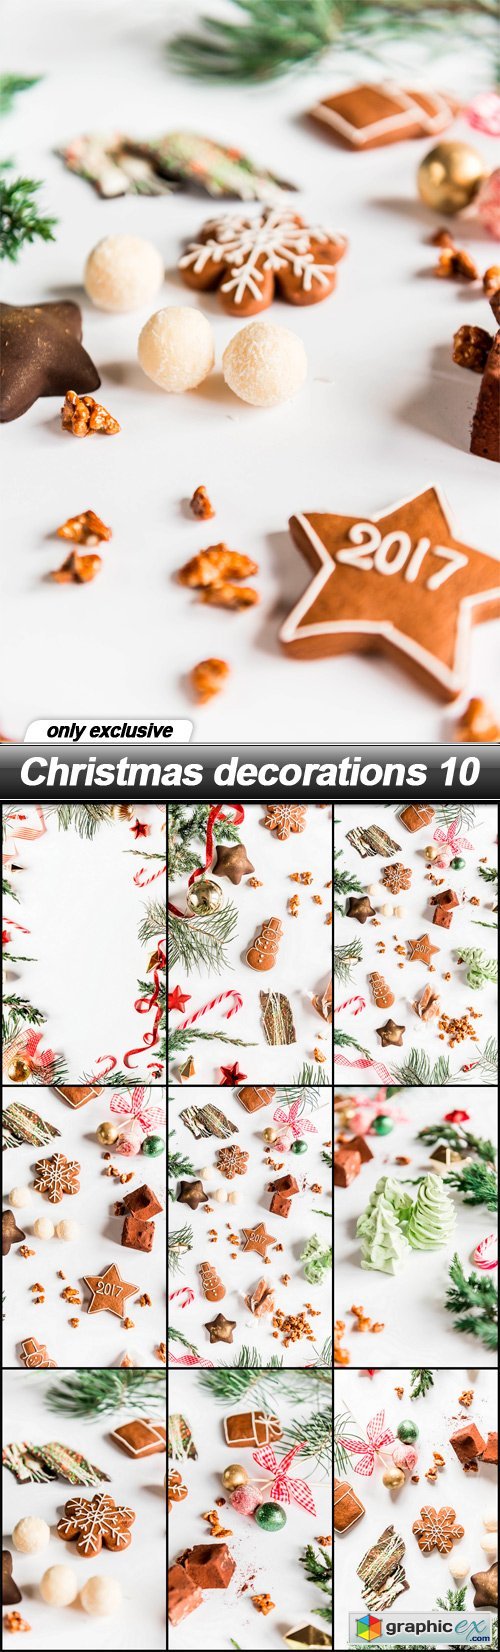 Christmas decorations 10 - 10 UHQ JPEG